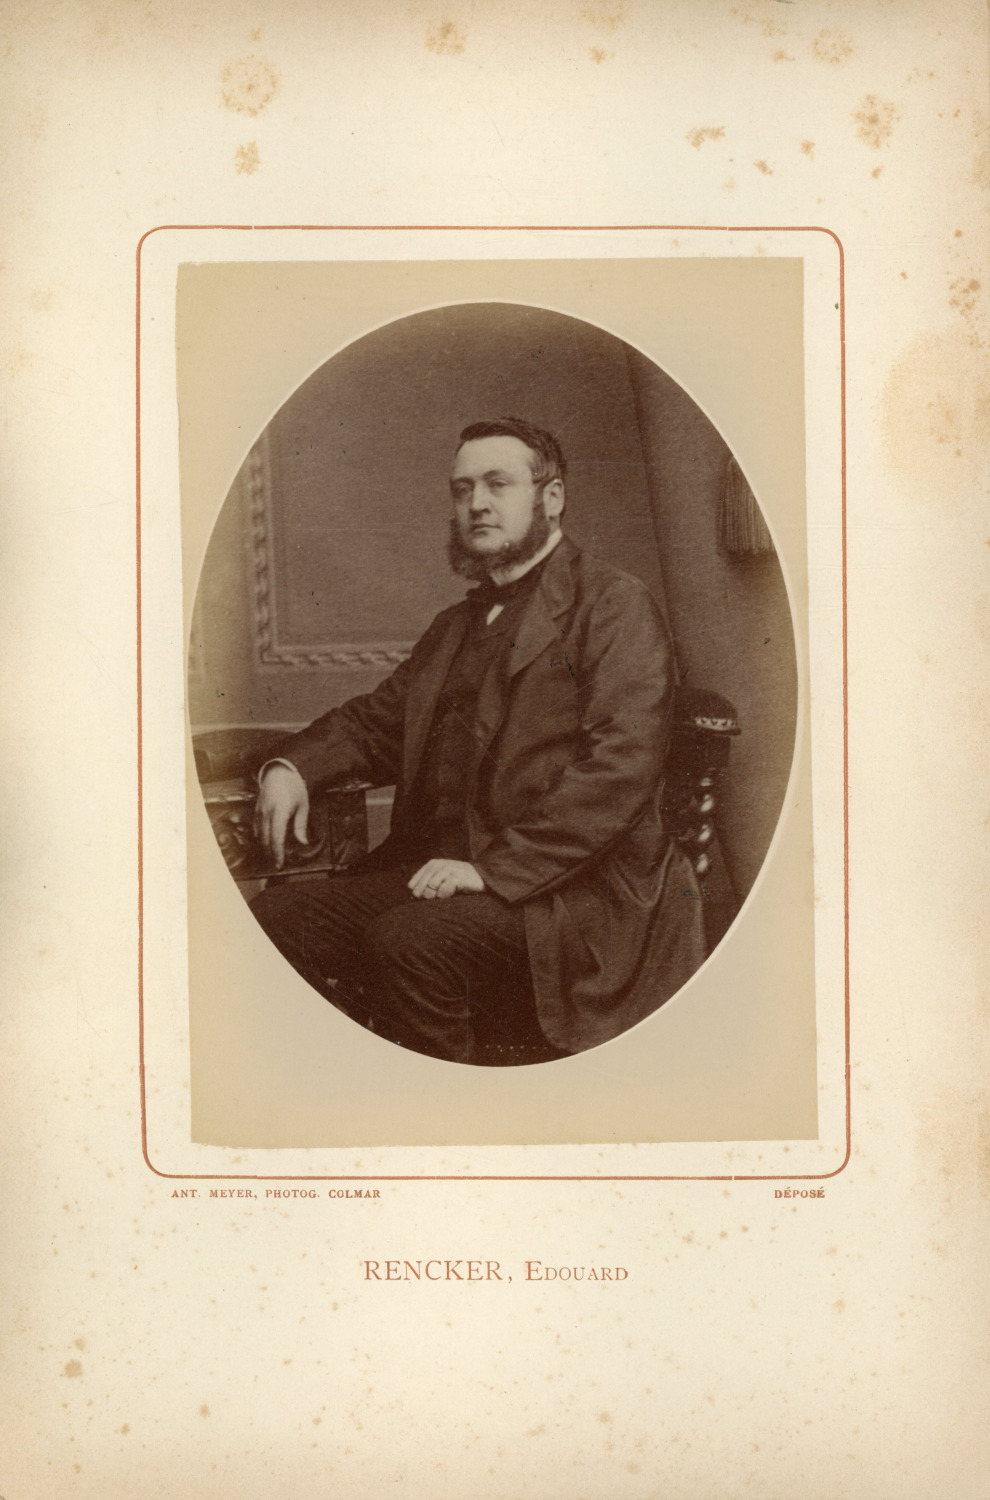 Ant. Meyer, Photog. Colmar, Marie-Antoine-Édouard Rencker (1827-1888), polished man